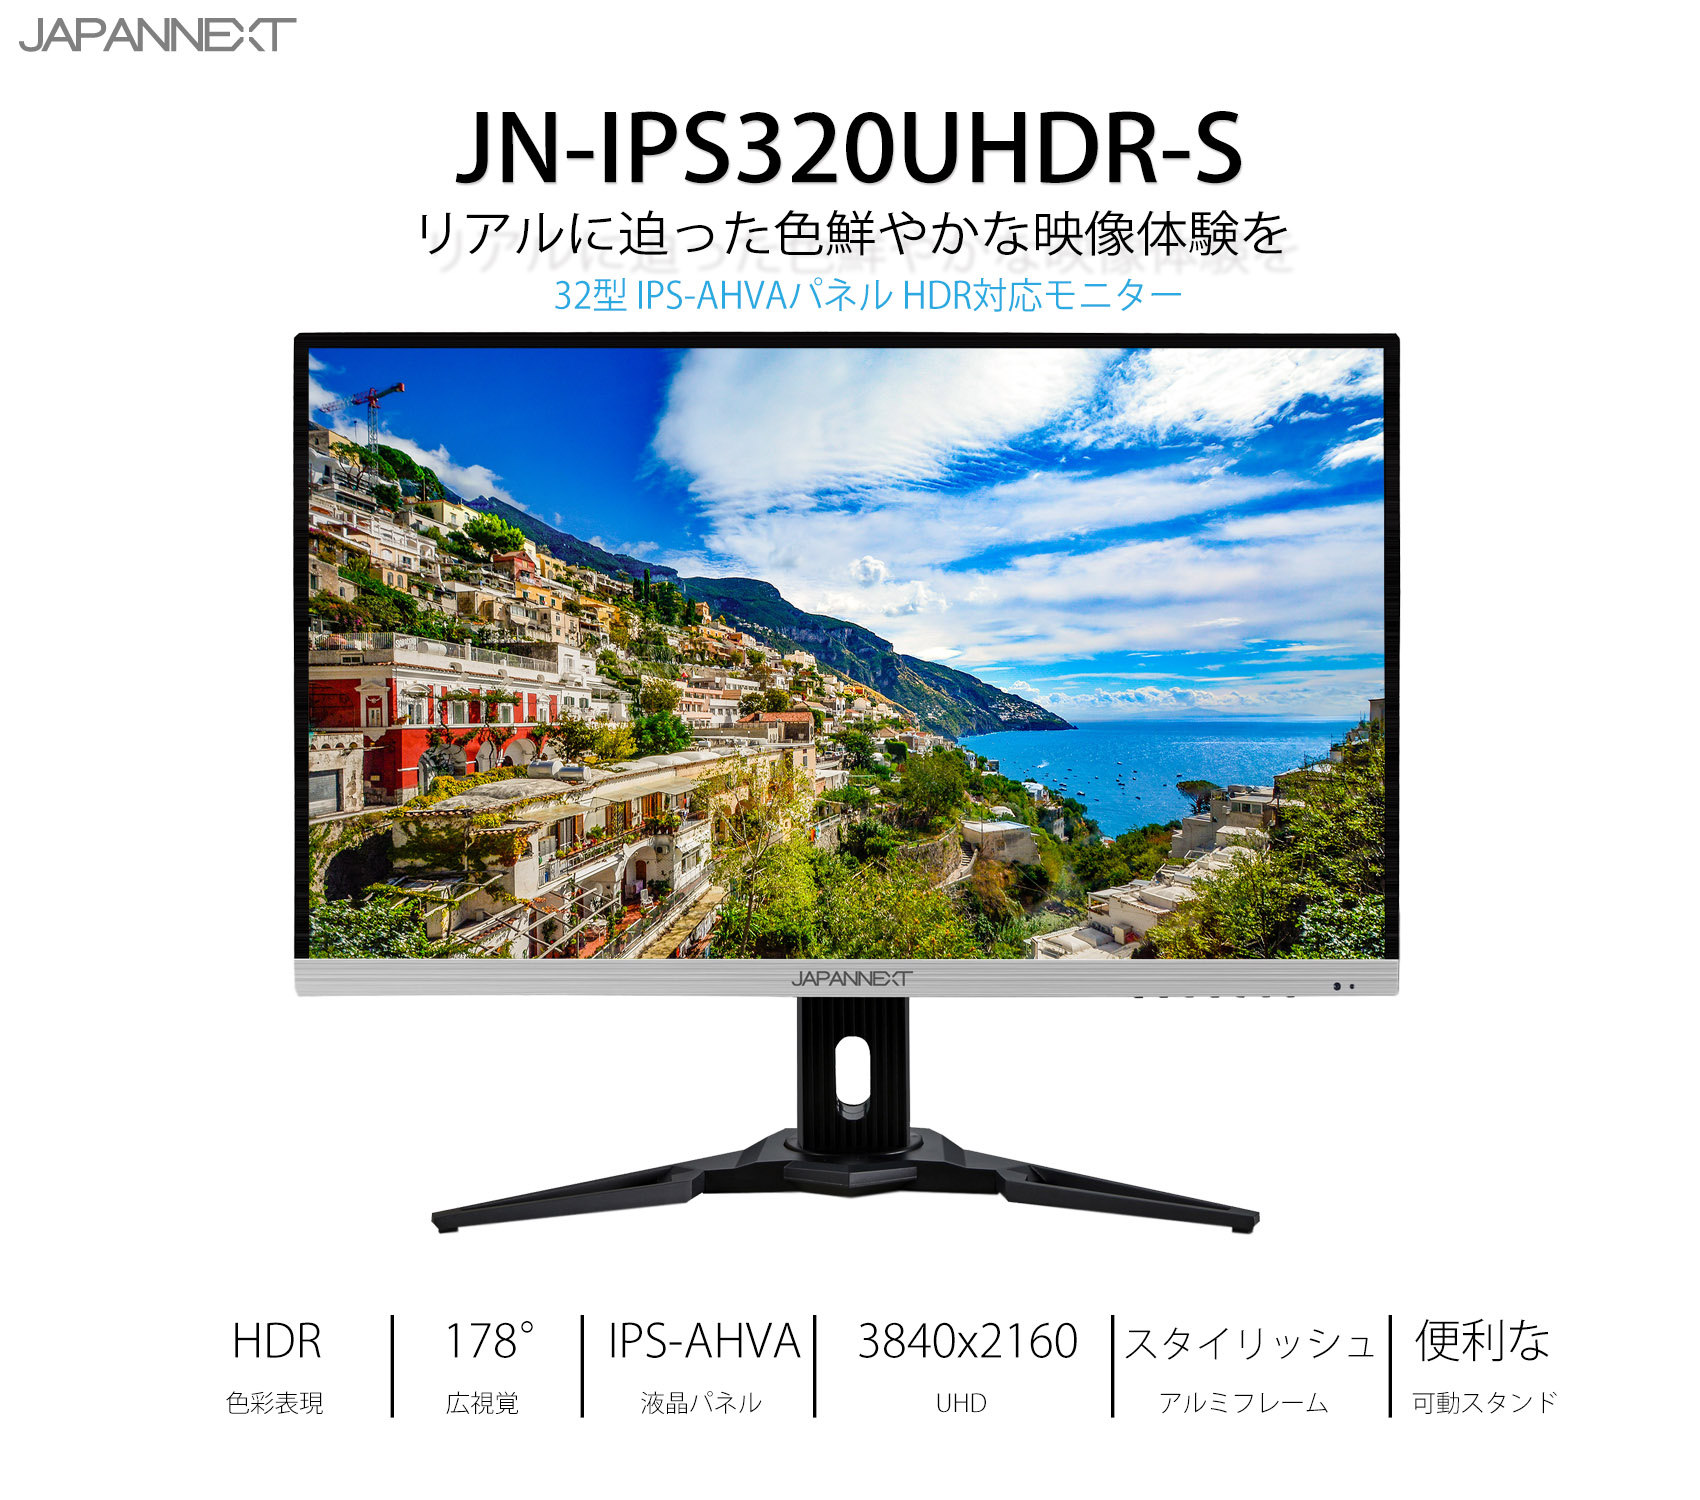 JAPANNEXT JN-IPS320UHDR-S 4K HDR対応32インチ液晶ディスプレイ 